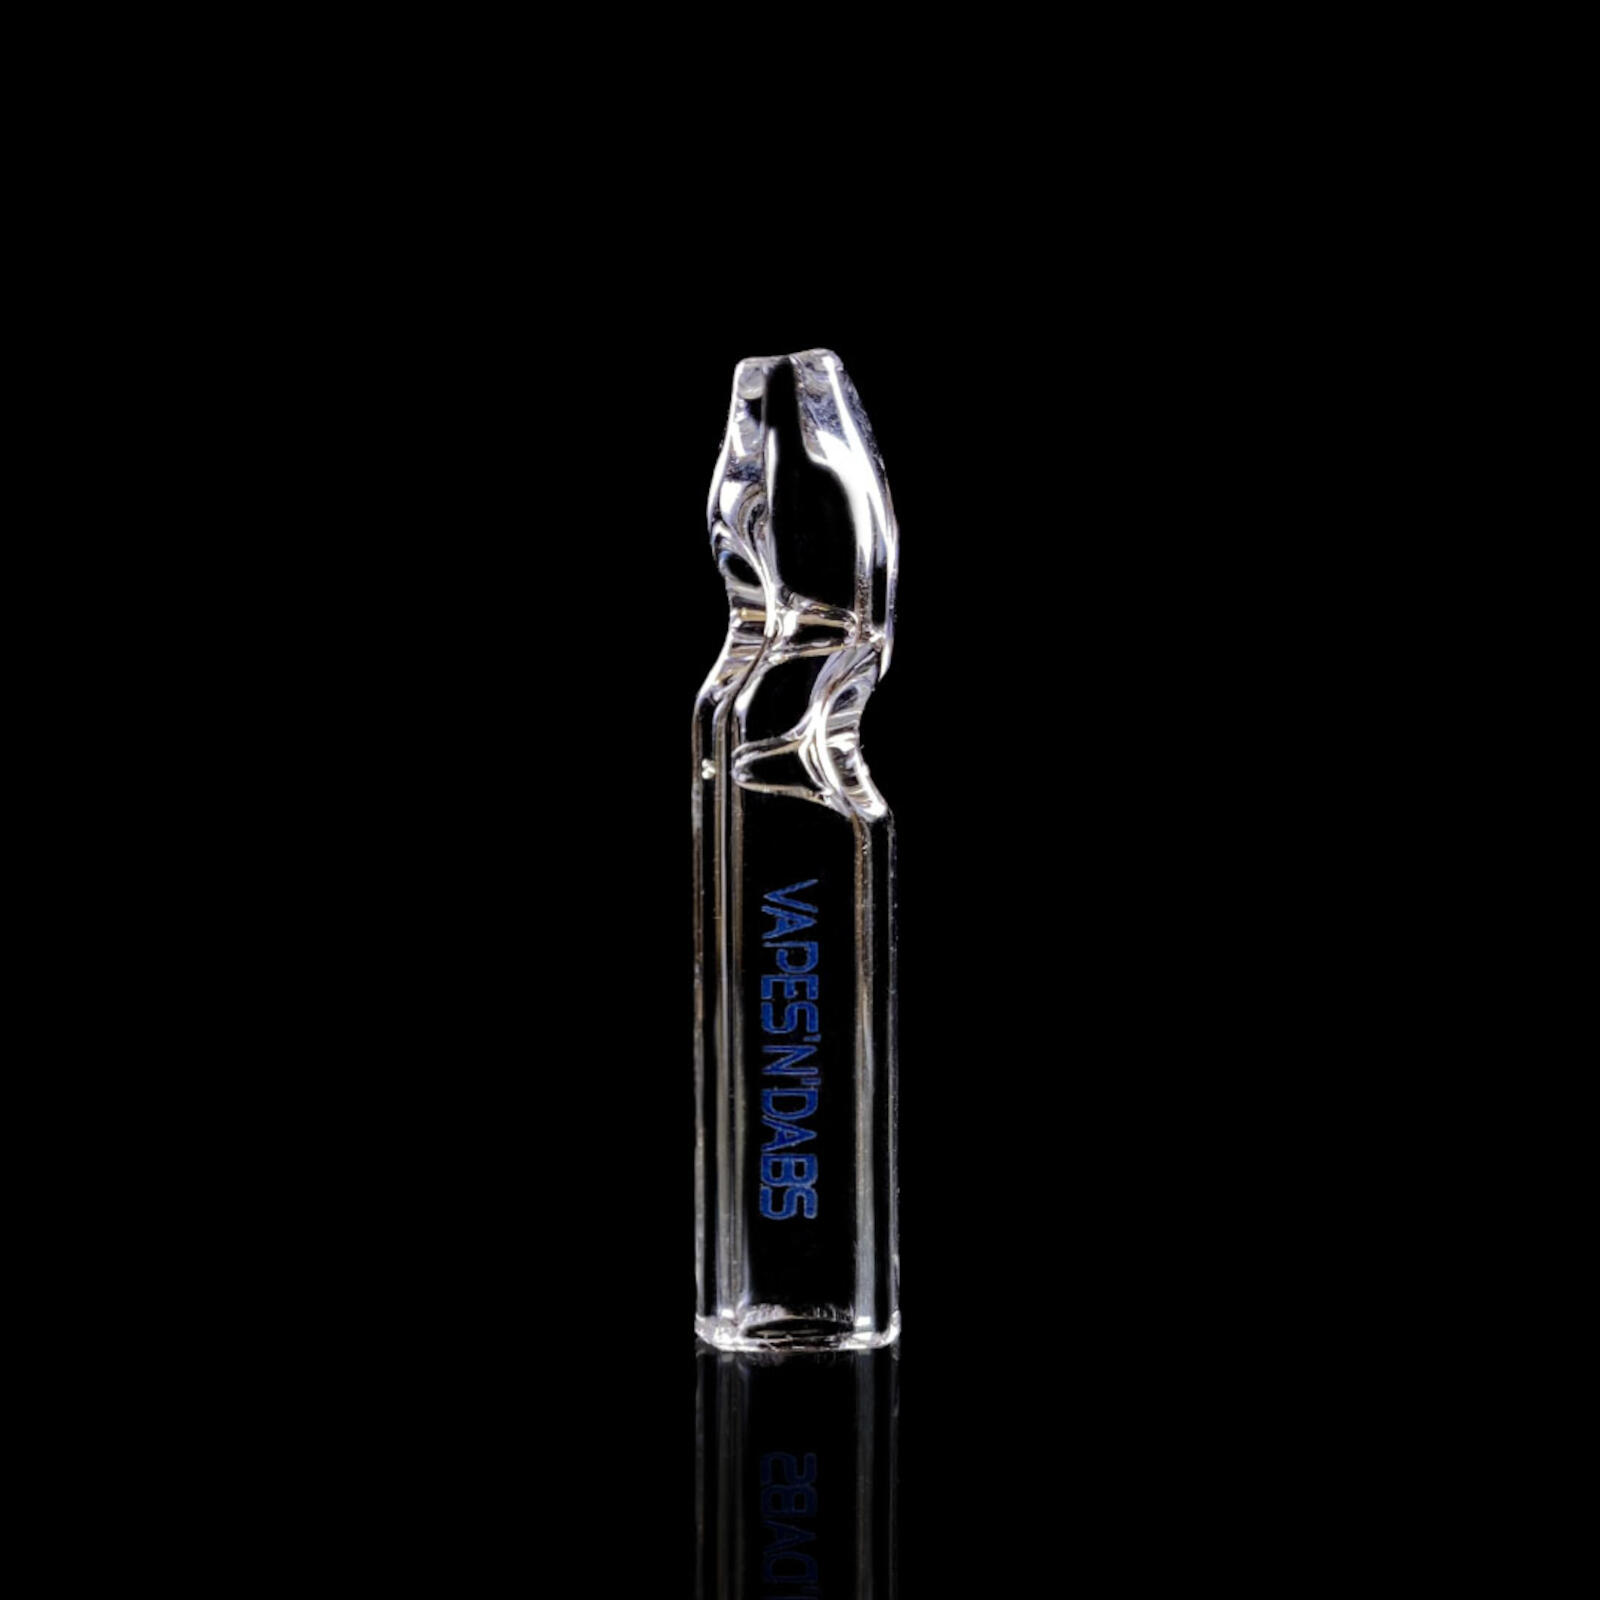 VnD Glass Mouthpiece | Glass Filter